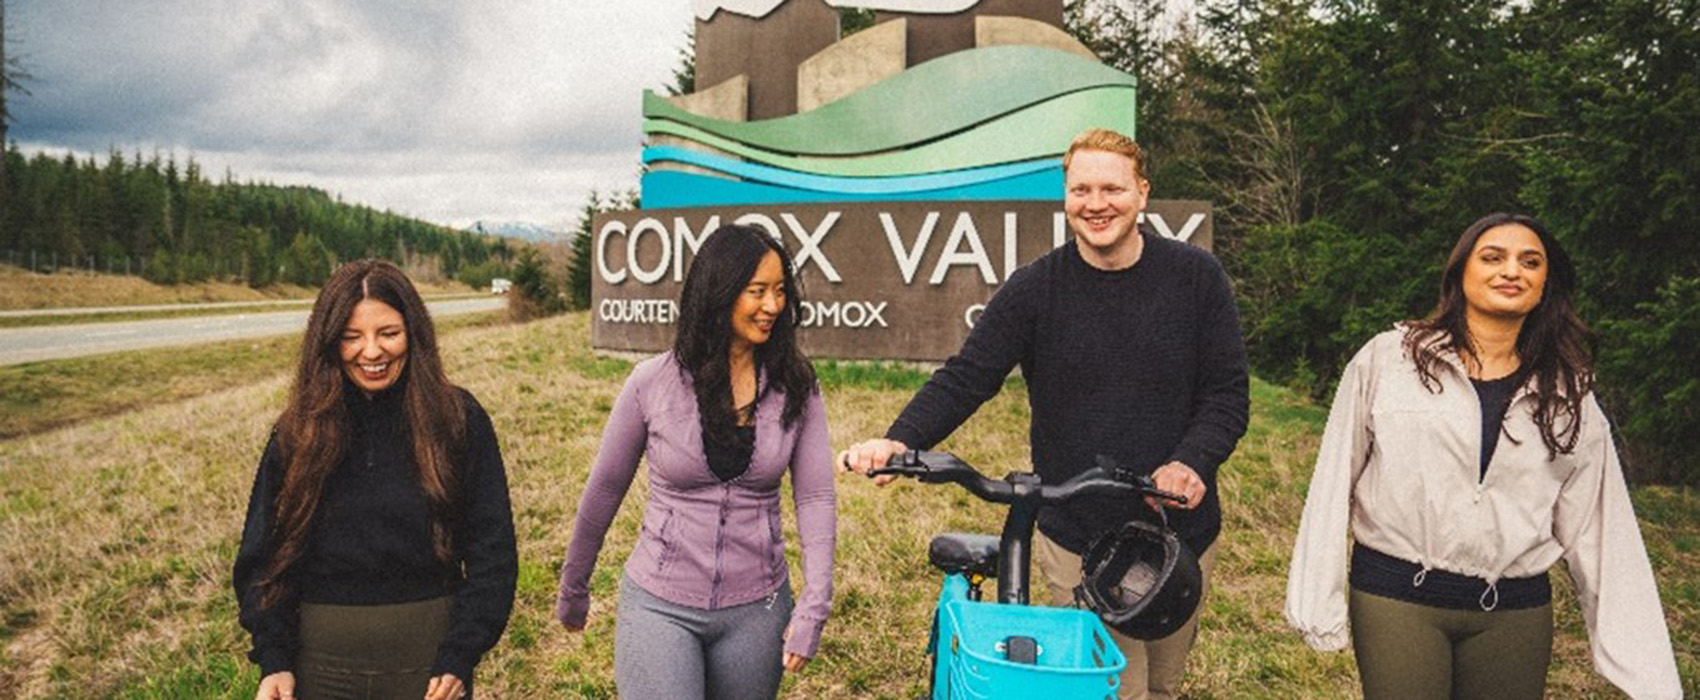 Evolve E-Bike Comox Valley